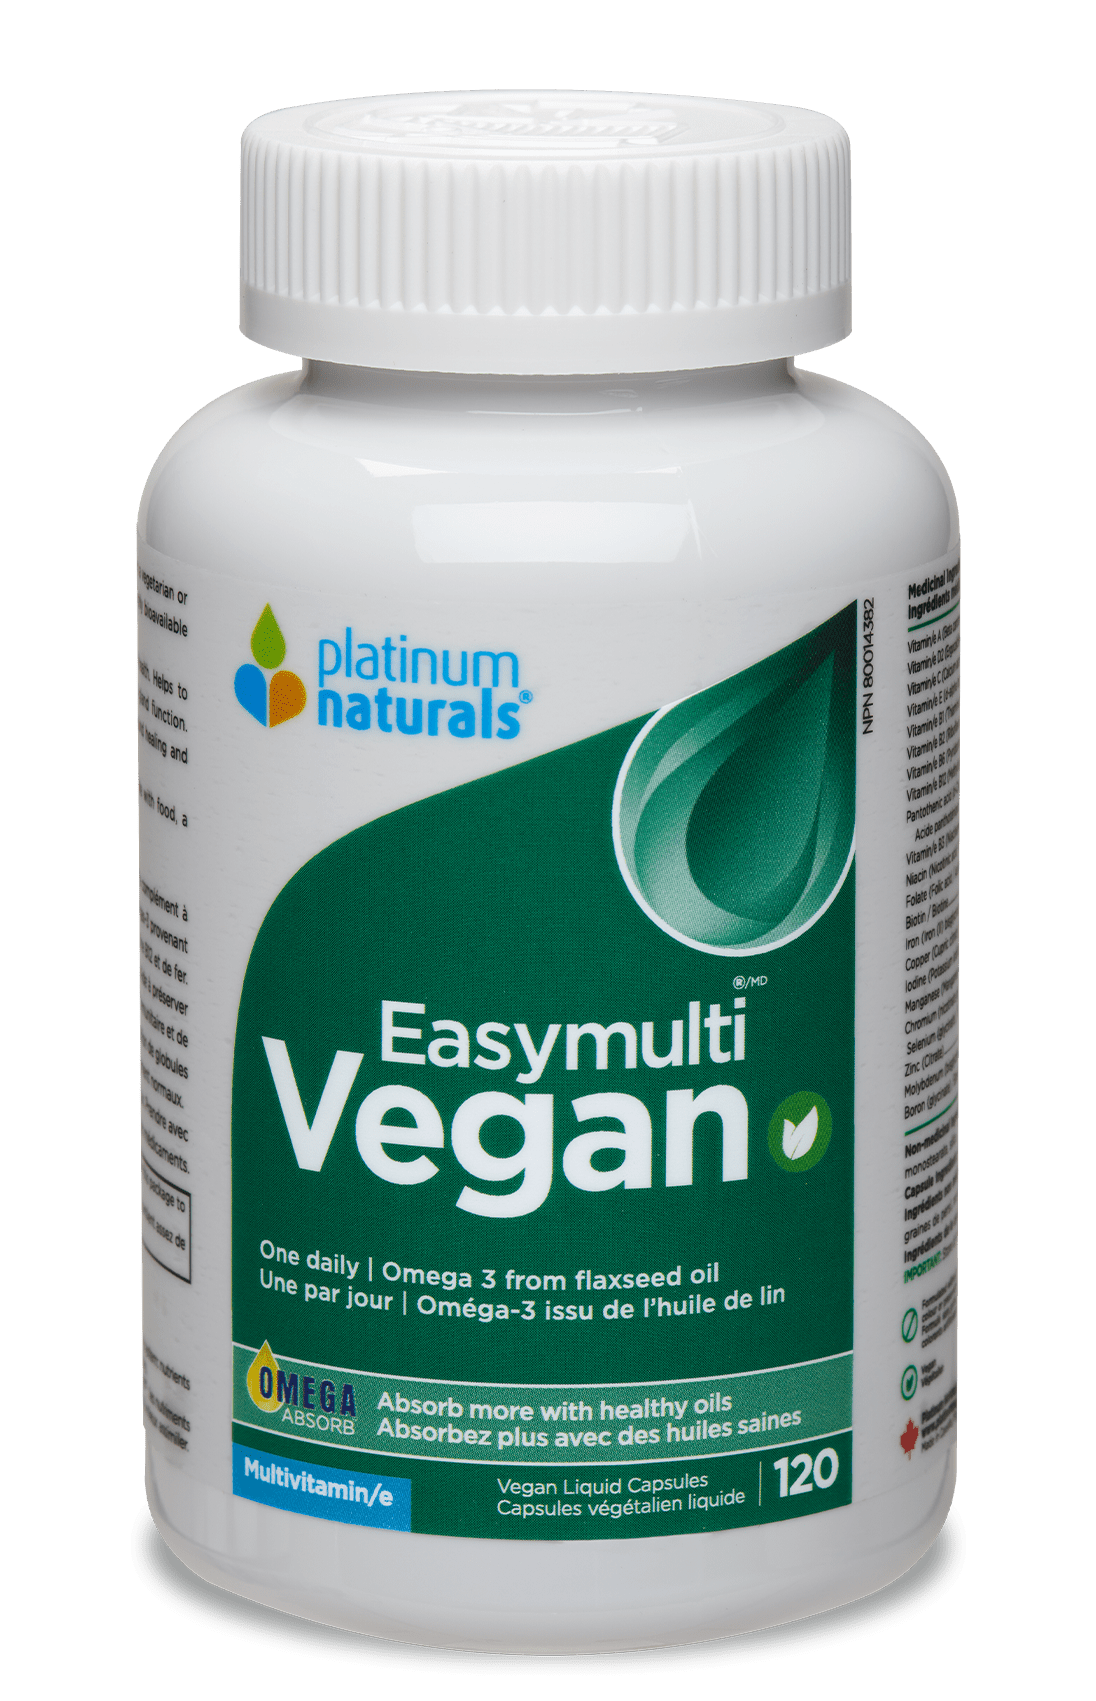 Multivitamin for vegetarian diets